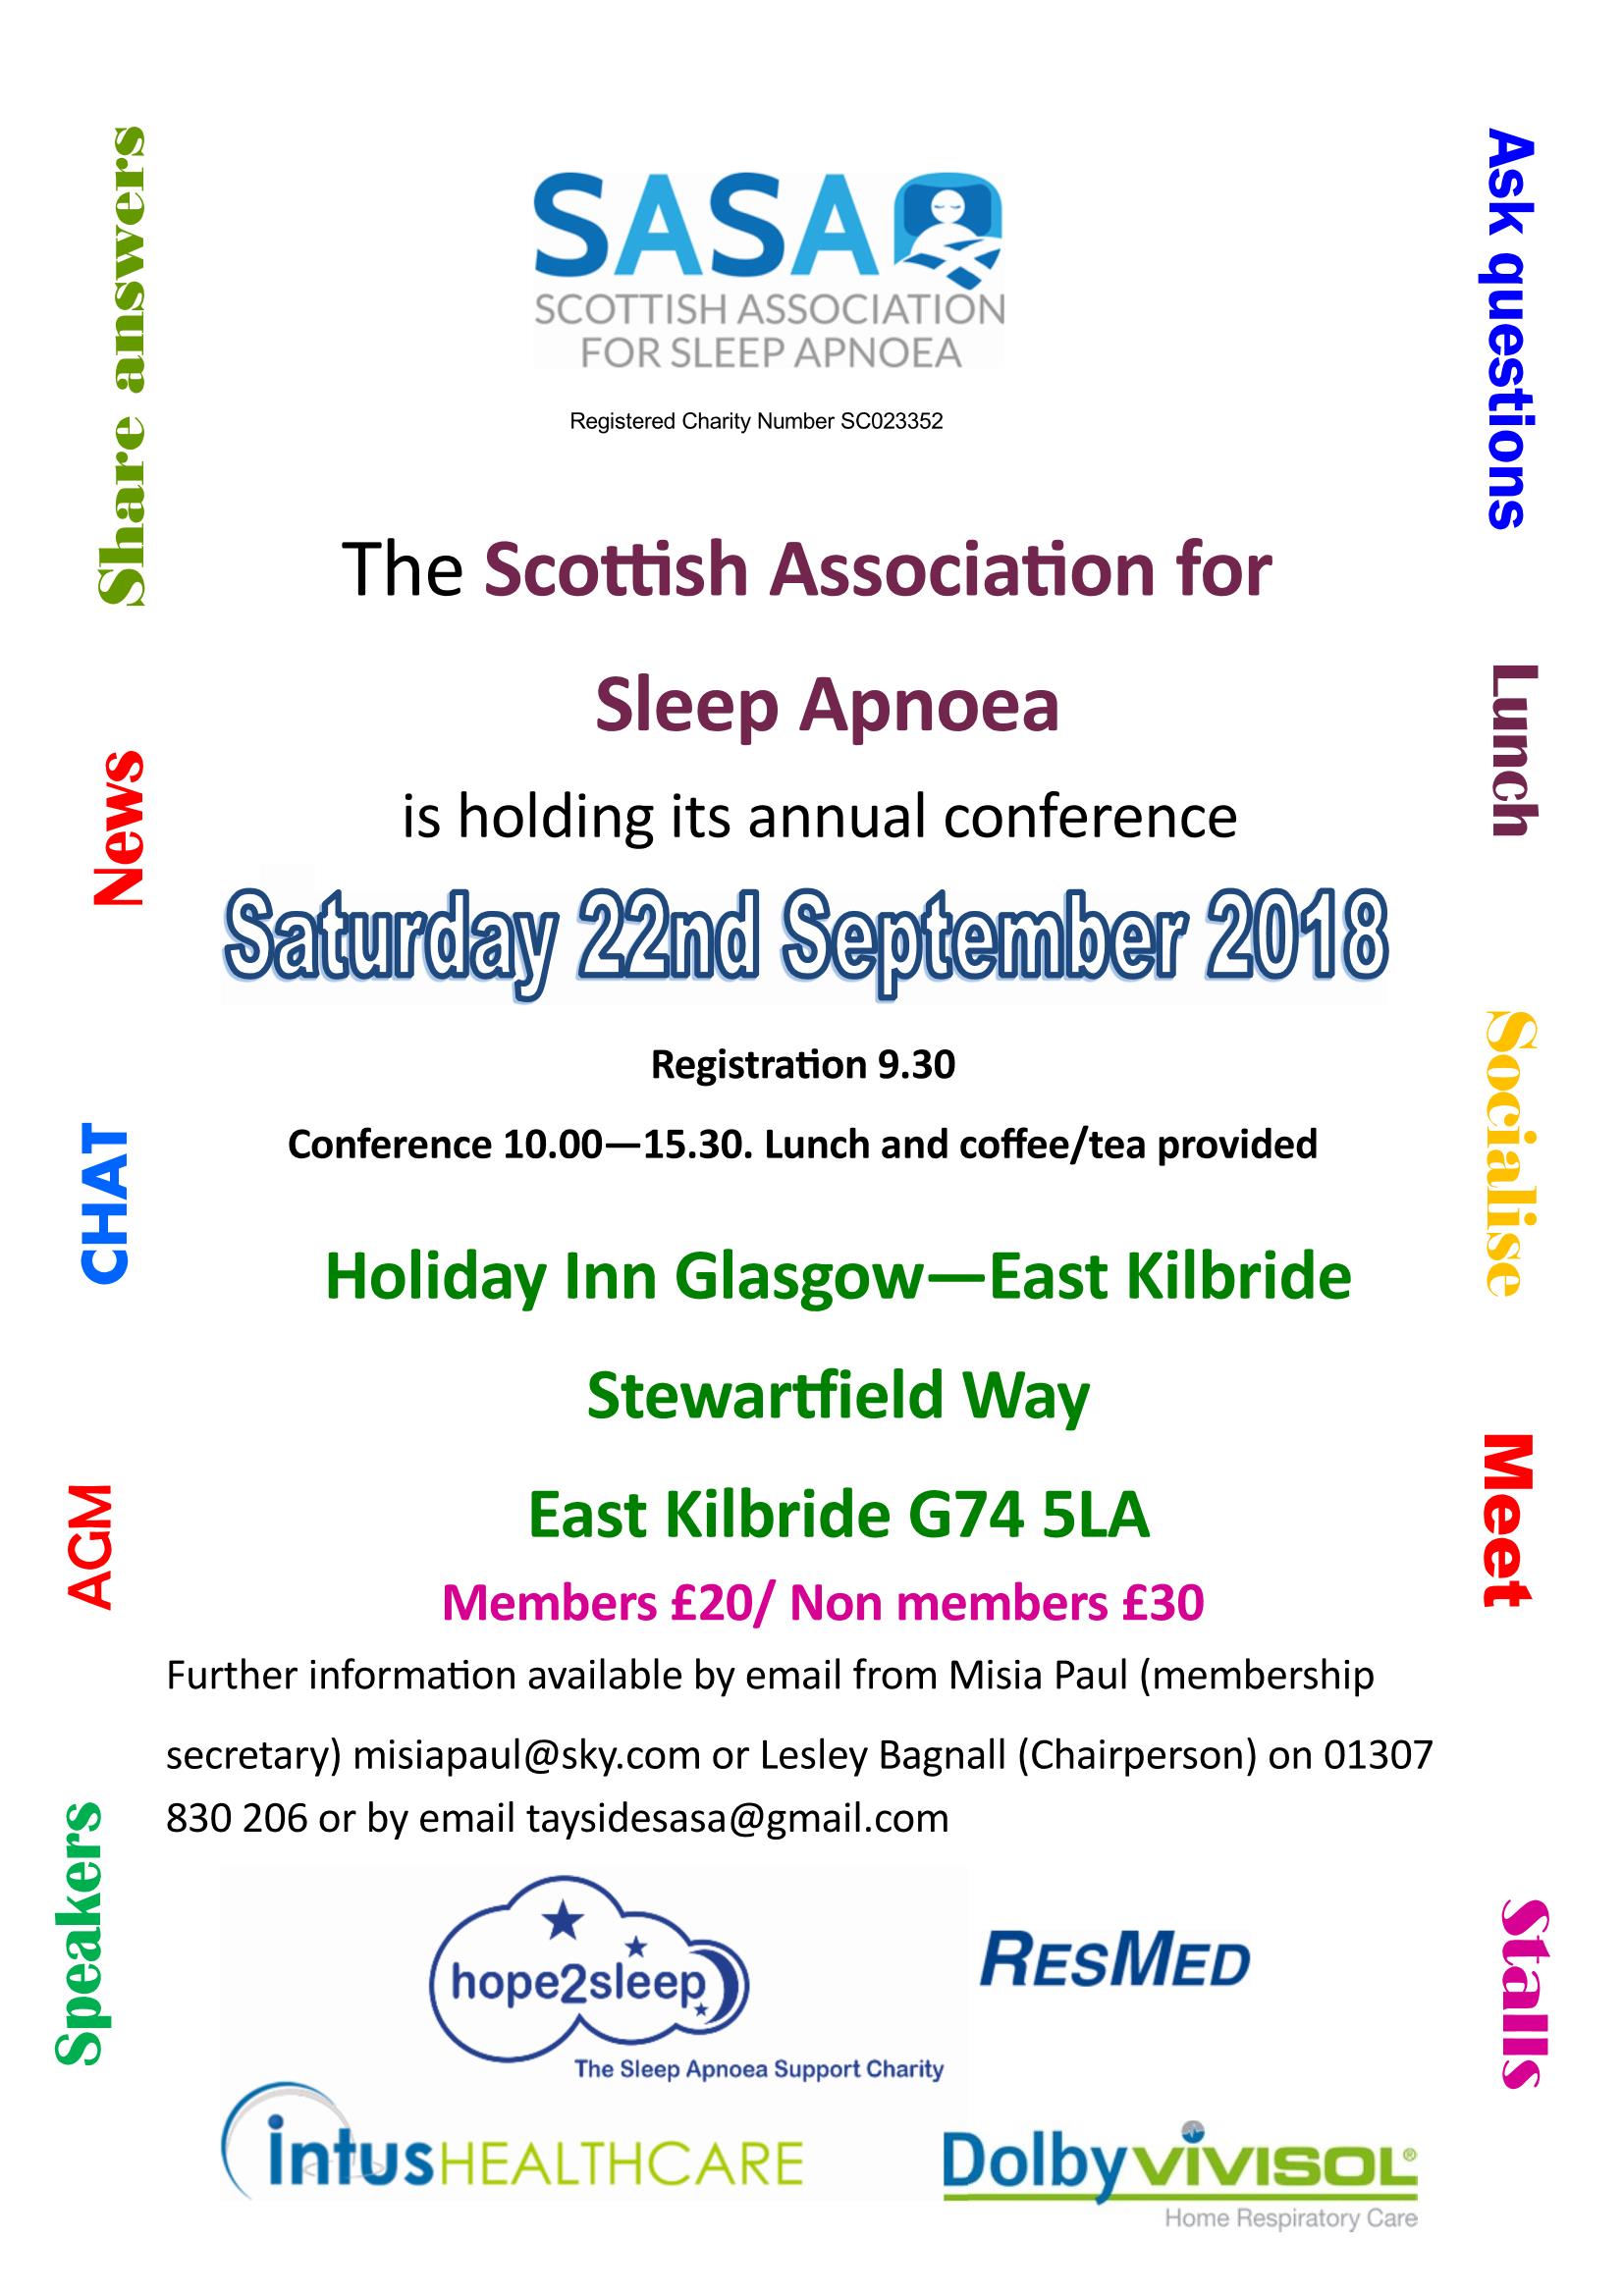 SASA Sleep Apnoea Conference